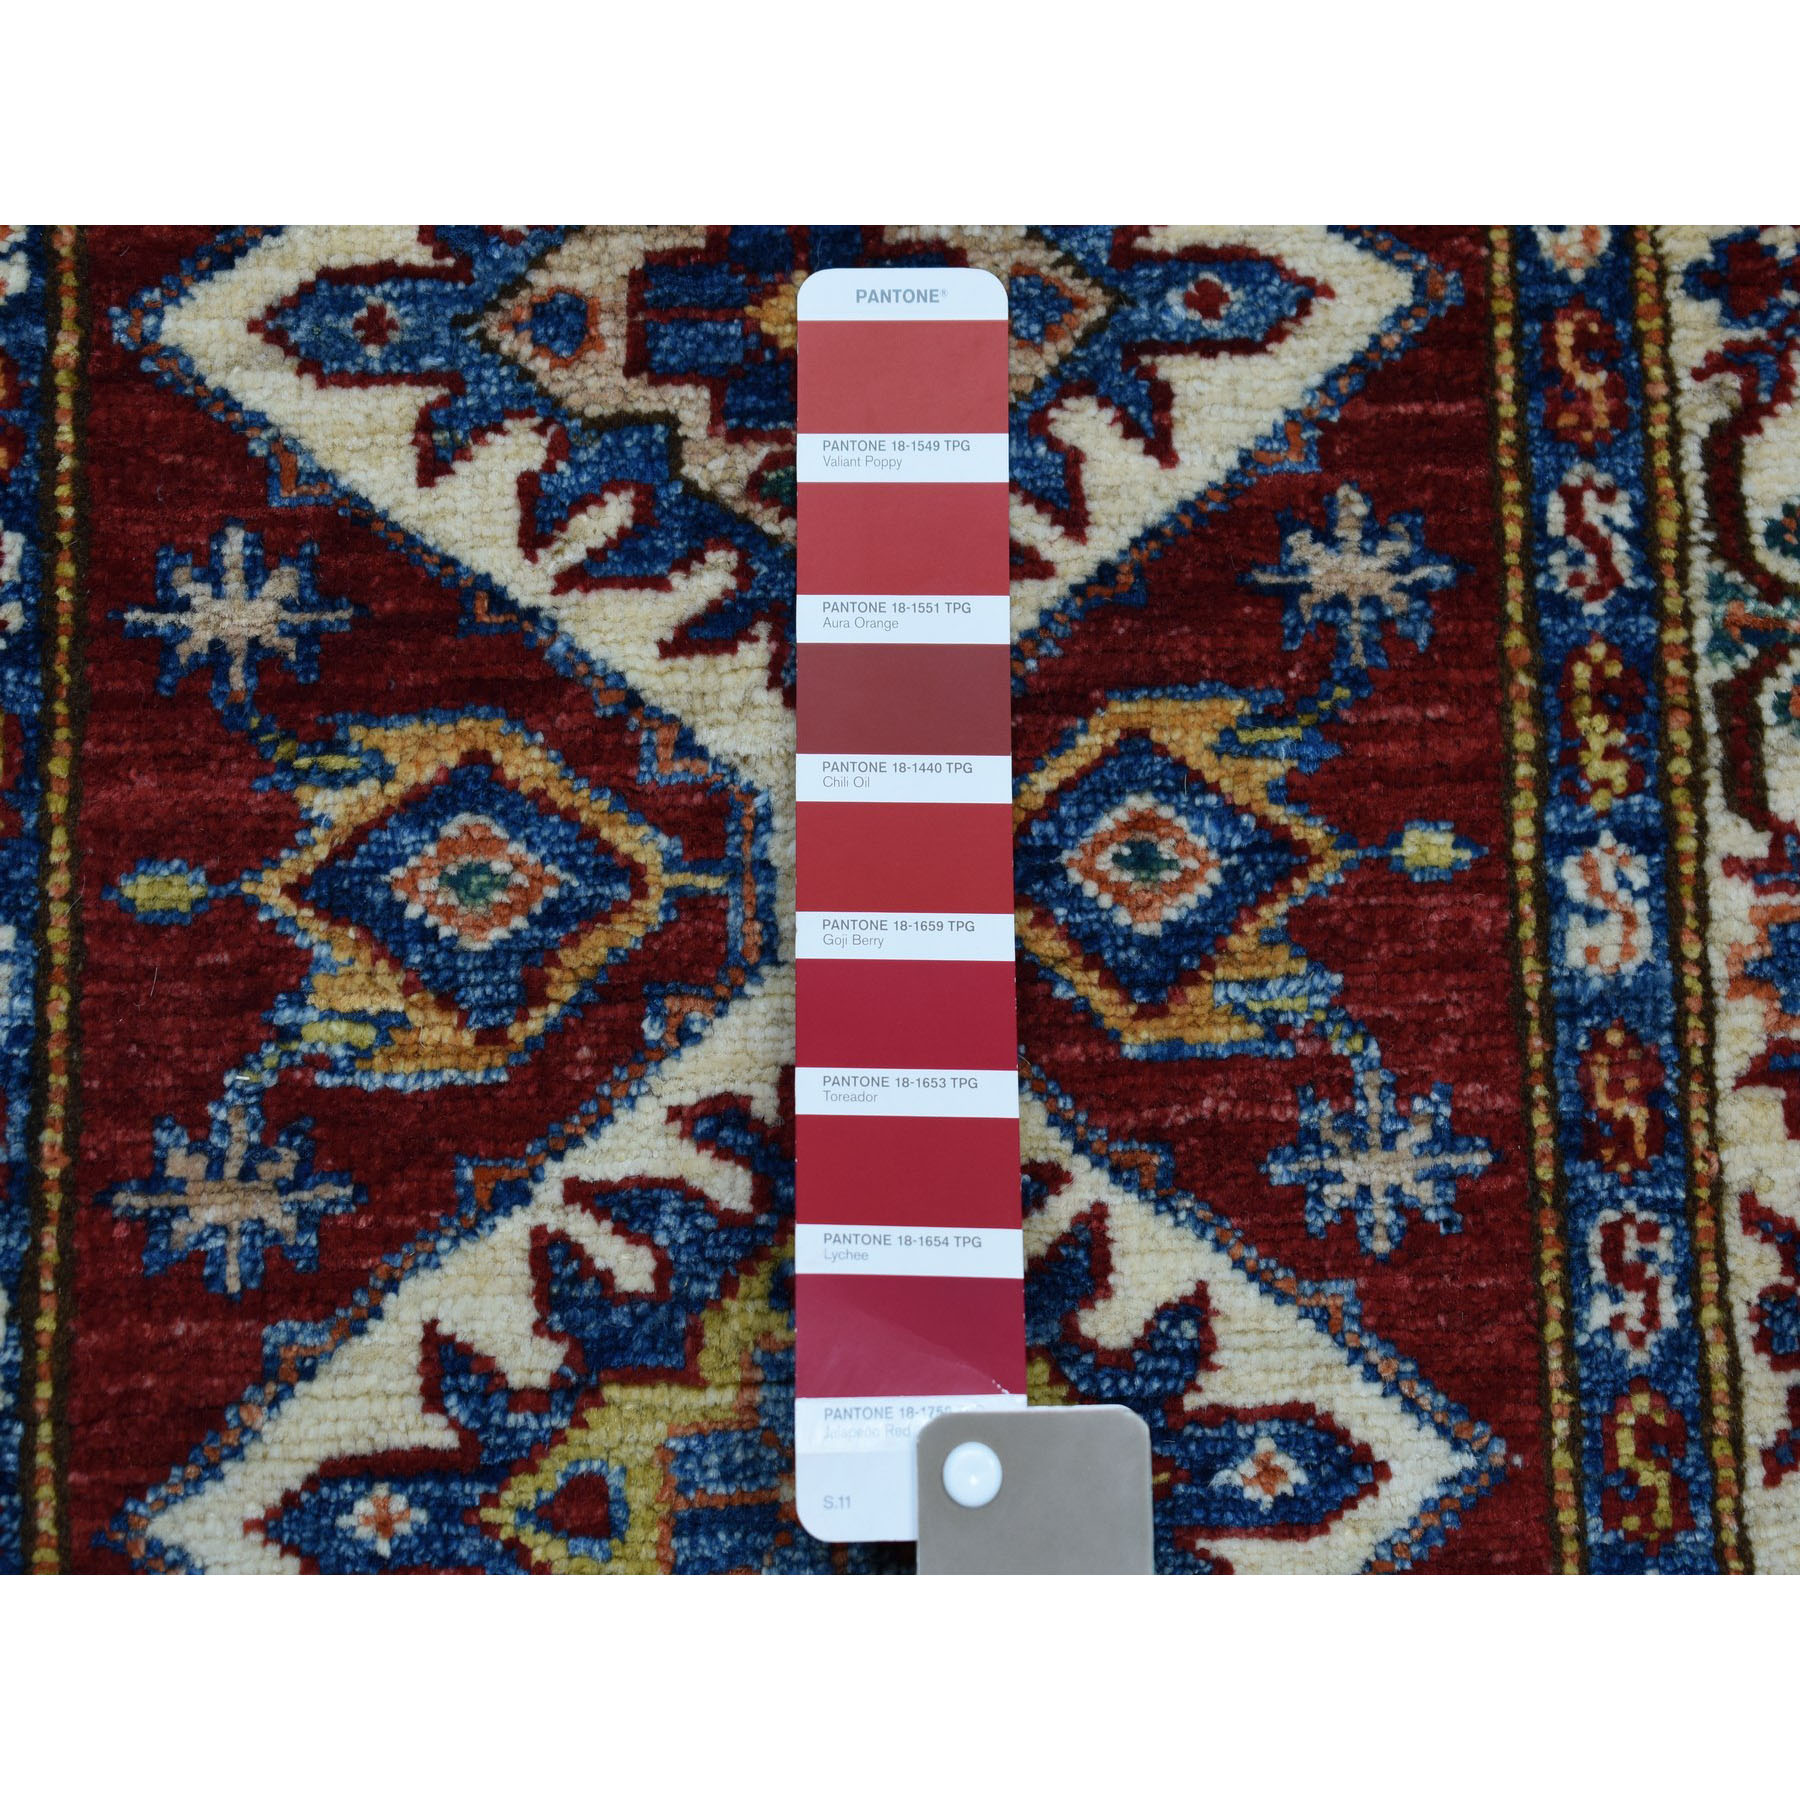 2-x3-1  Red Super Kazak Geometric Design Pure Wool Hand-Knotted Oriental Rug 